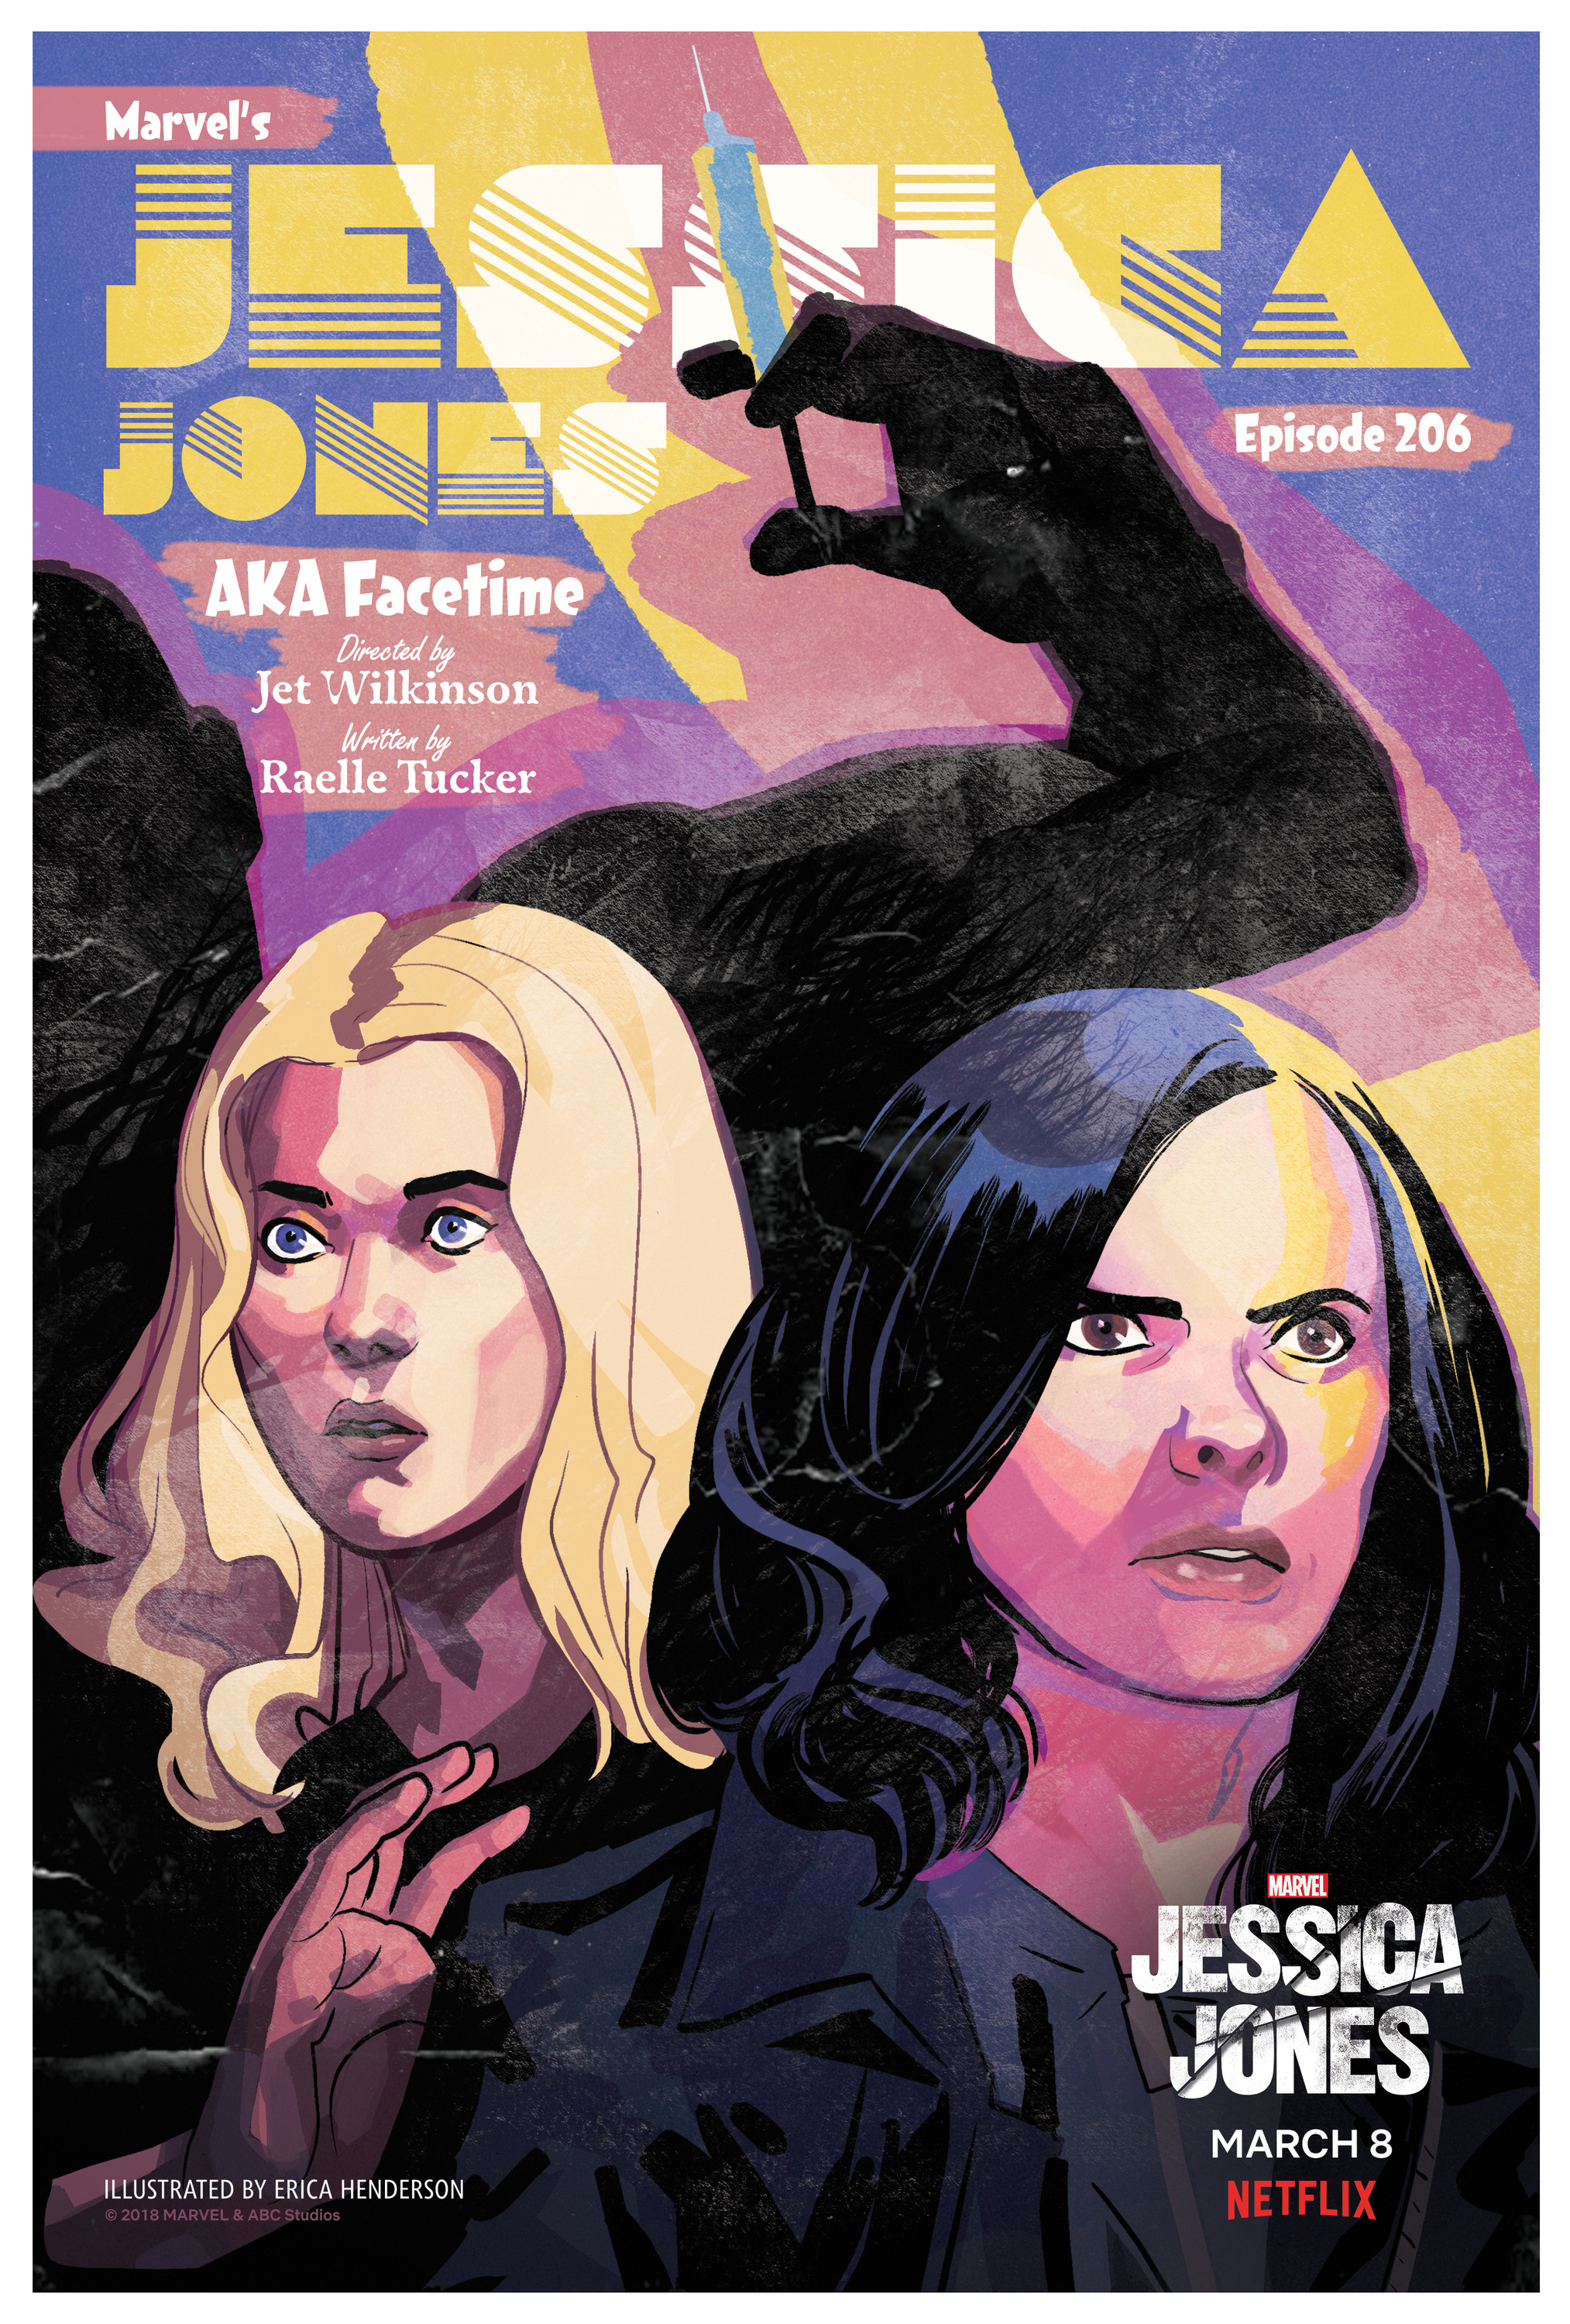 Mega Sized TV Poster Image for Jessica Jones (#12 of 21)